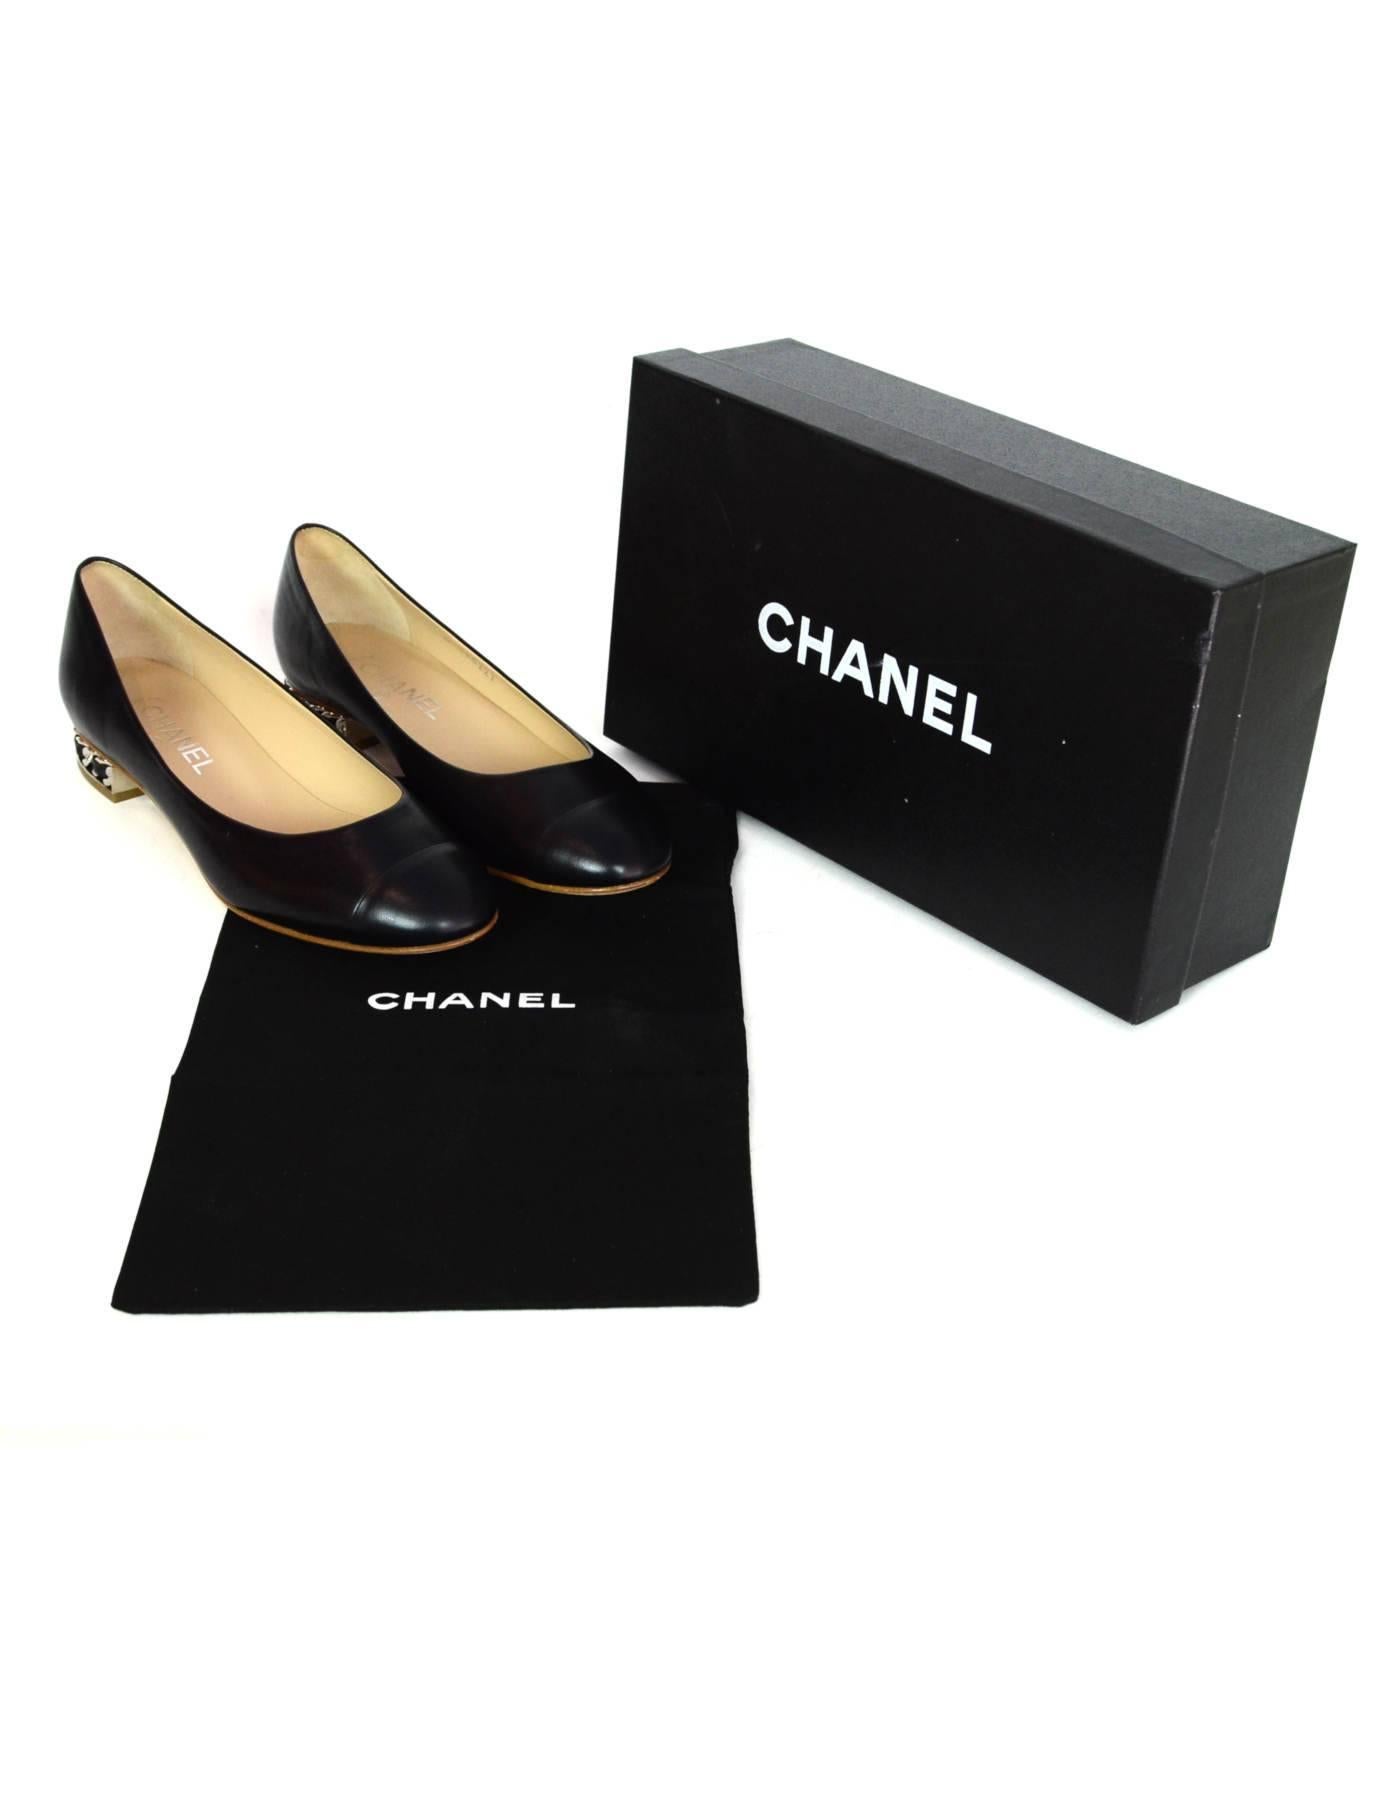 Chanel Black Leather Flats with Chain Heels Sz 39 NIB 2